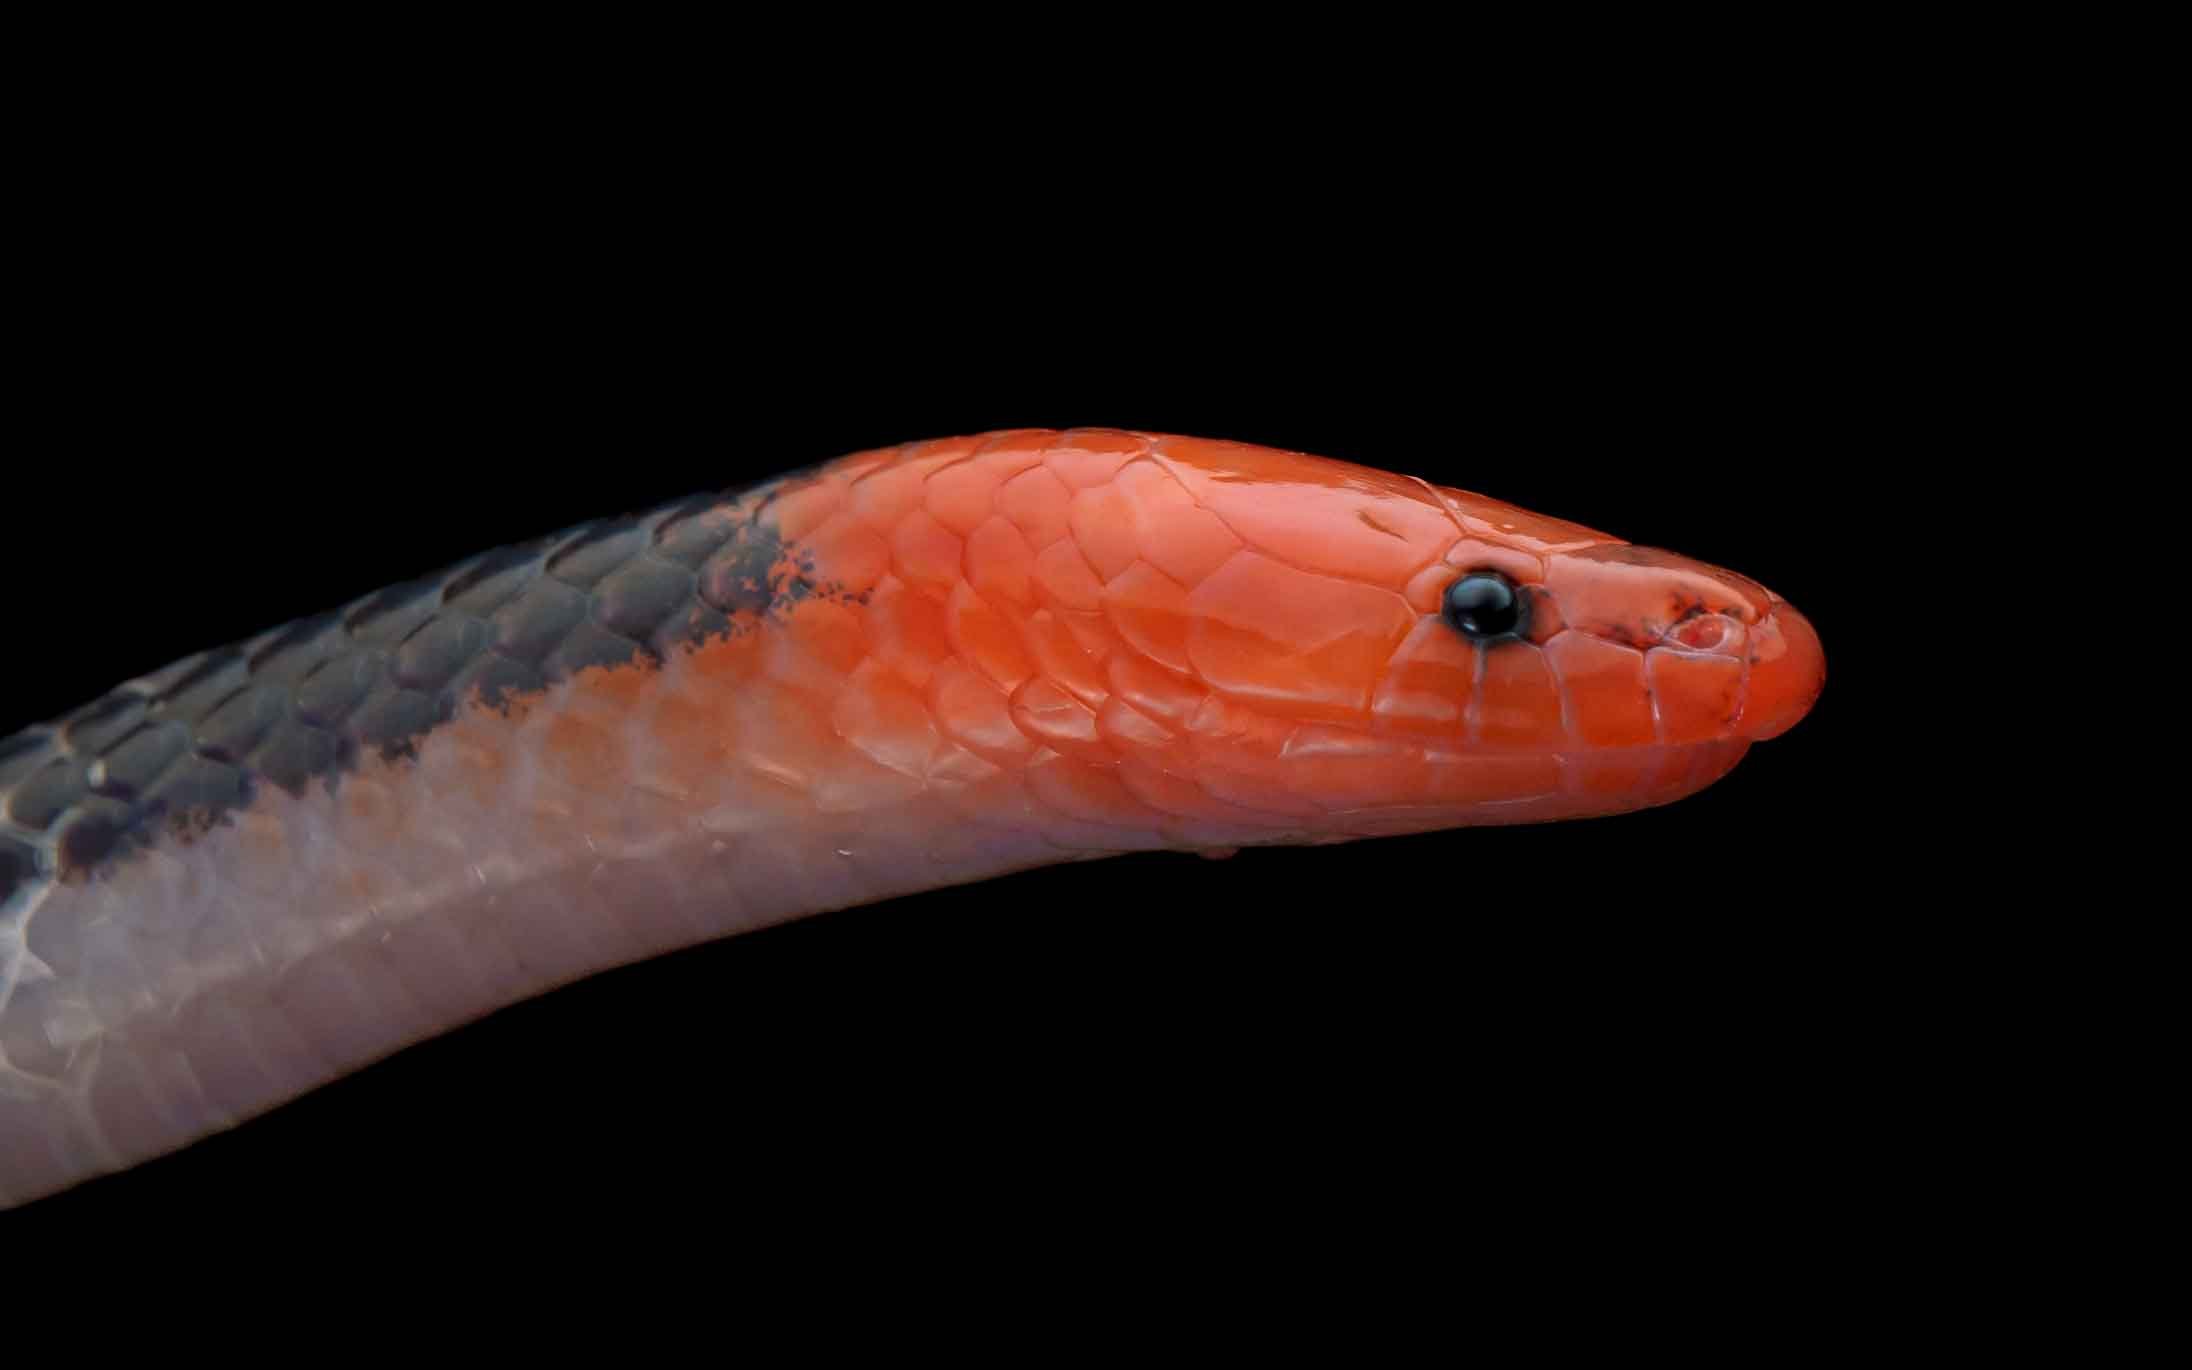 Pink Headed Reed Snake - Calamaria schlegeli